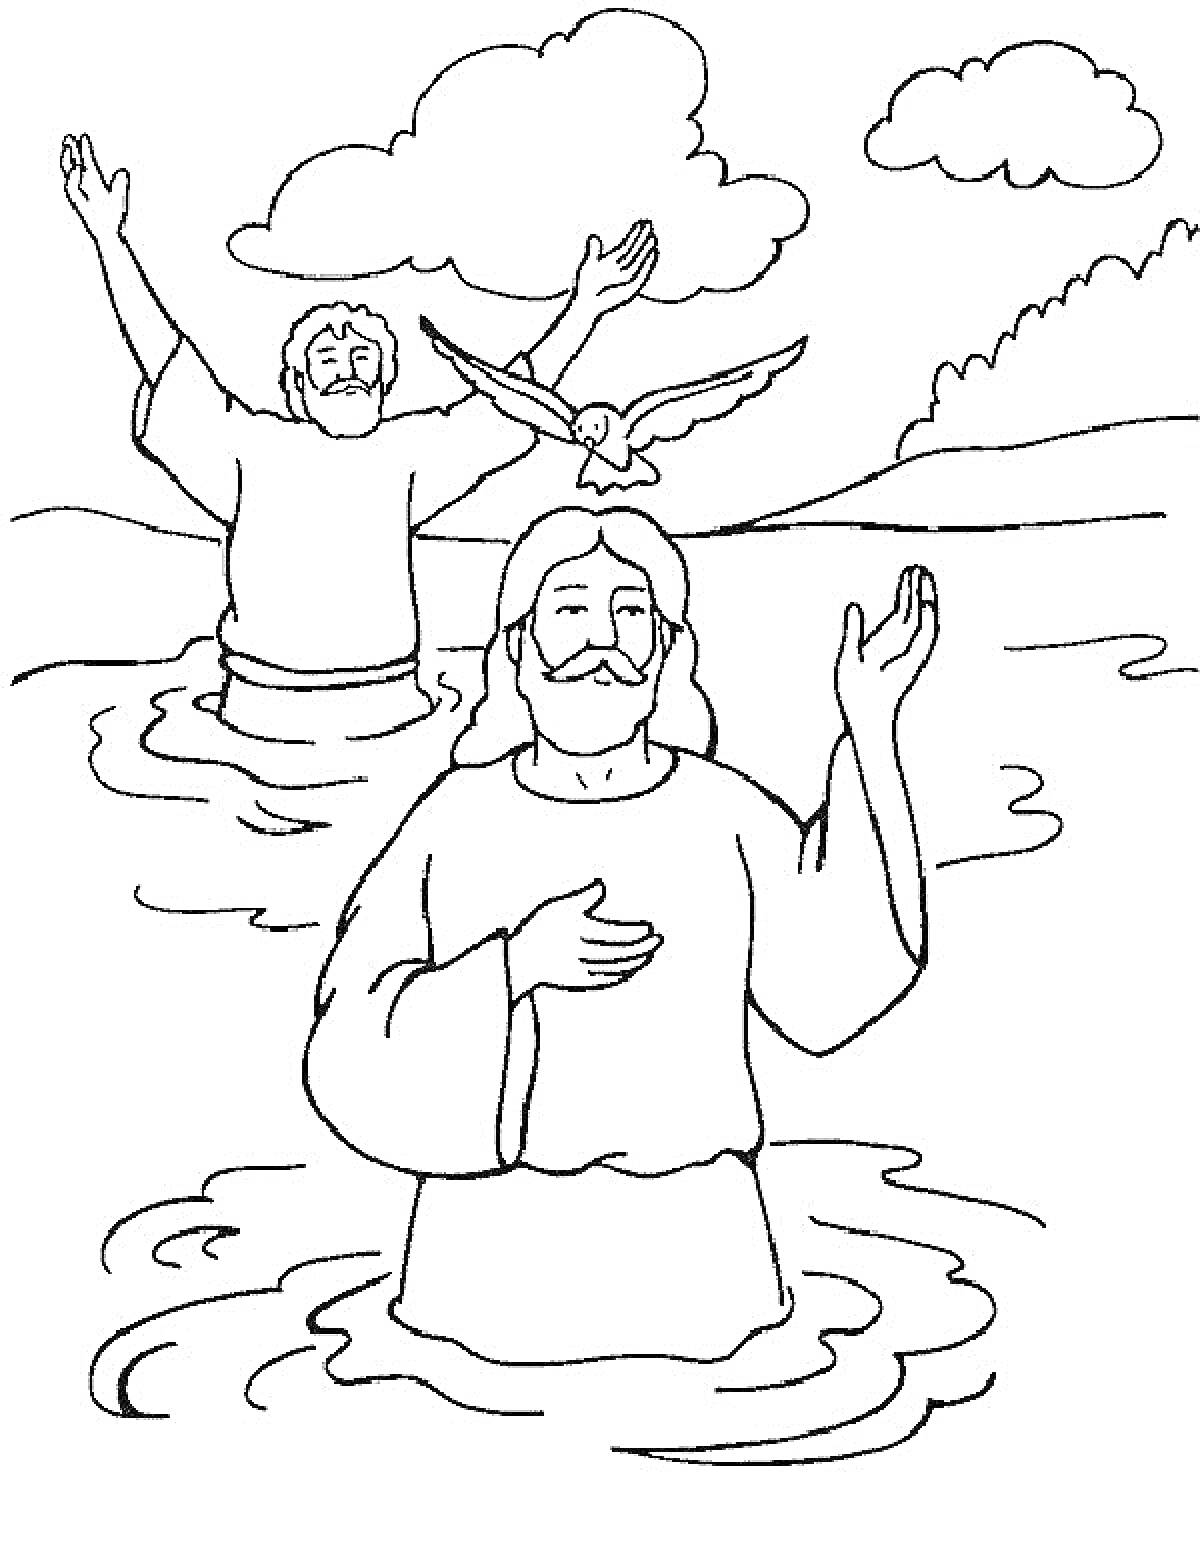 На раскраске изображено: Крещение, Река, Два человека, Вода, Облака, Религия, Христианство, Голуби